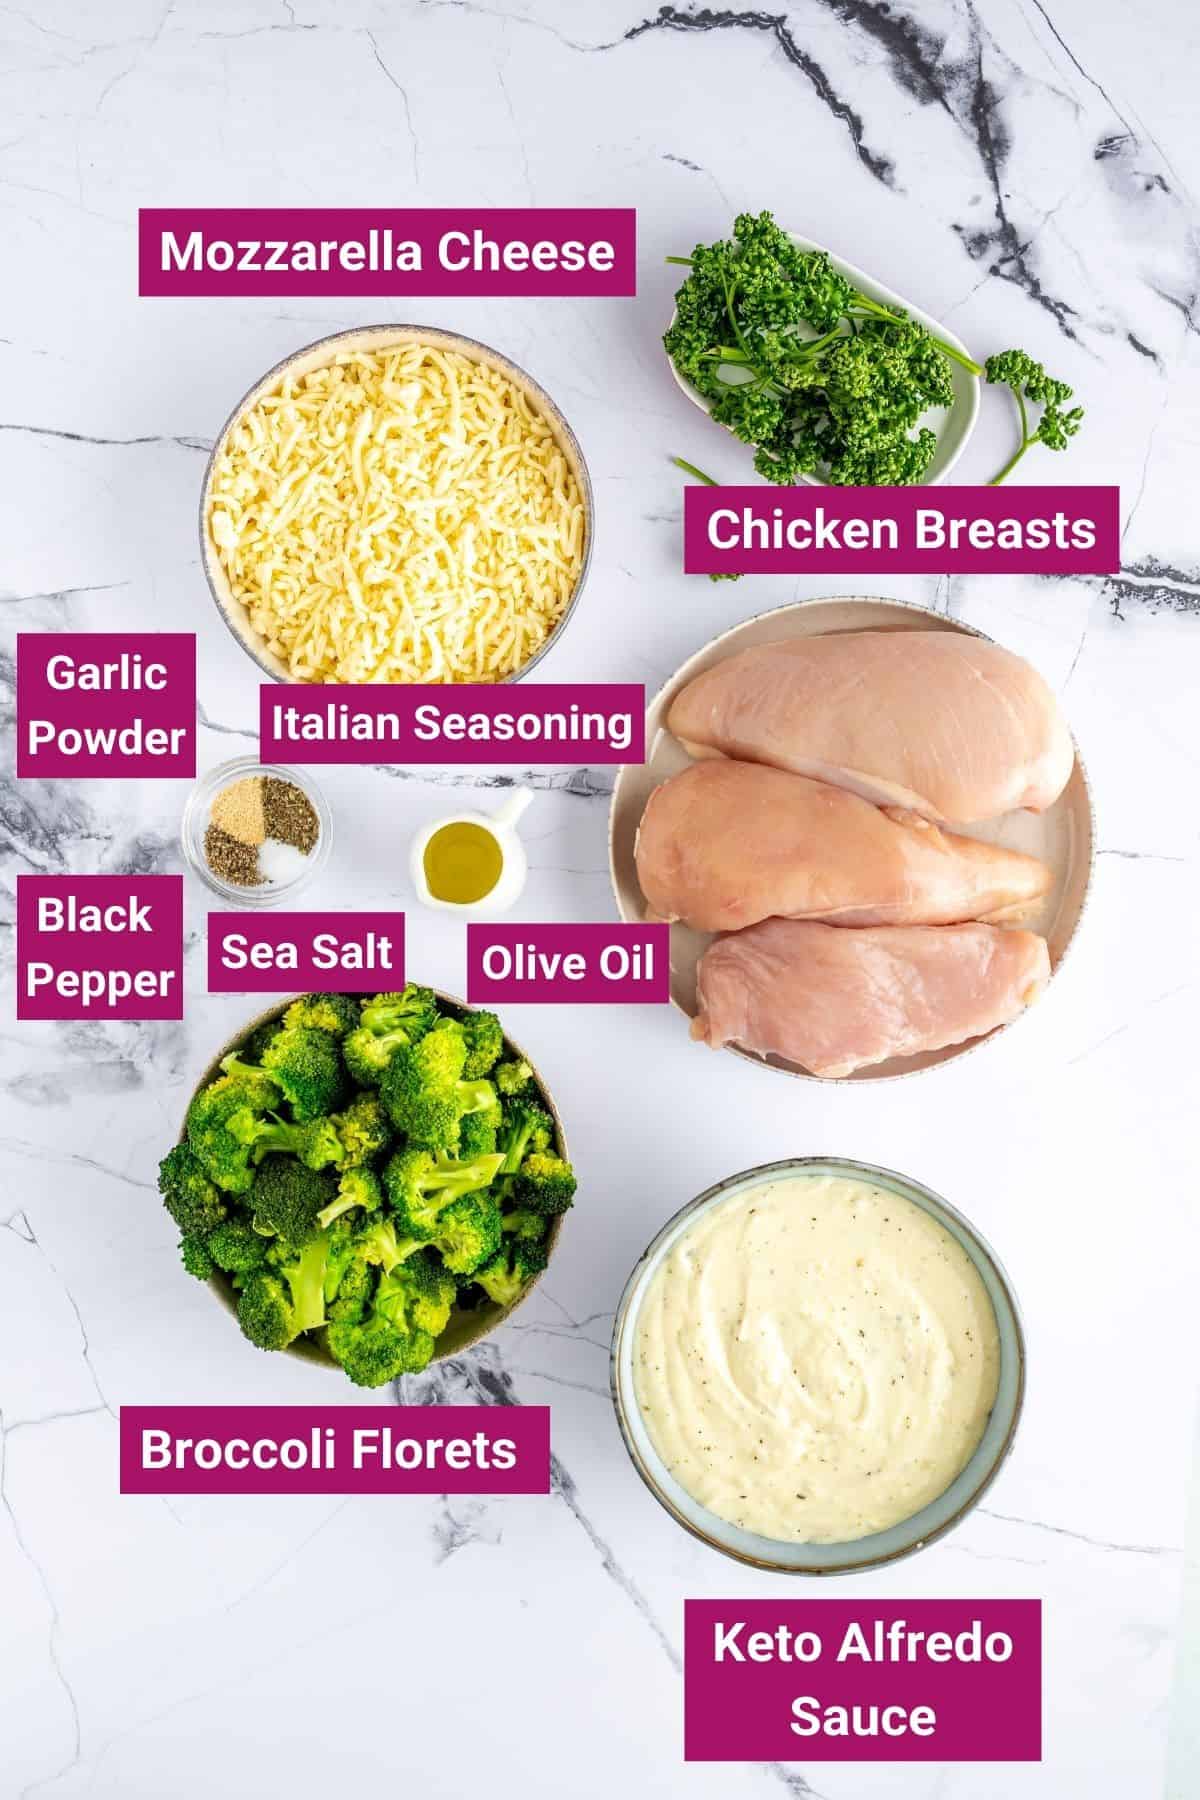 mozzarella cheese, chicken breasts, garlic powder, black pepper, sea salt, olive oil, broccoli and alredo sauce on separate bowls